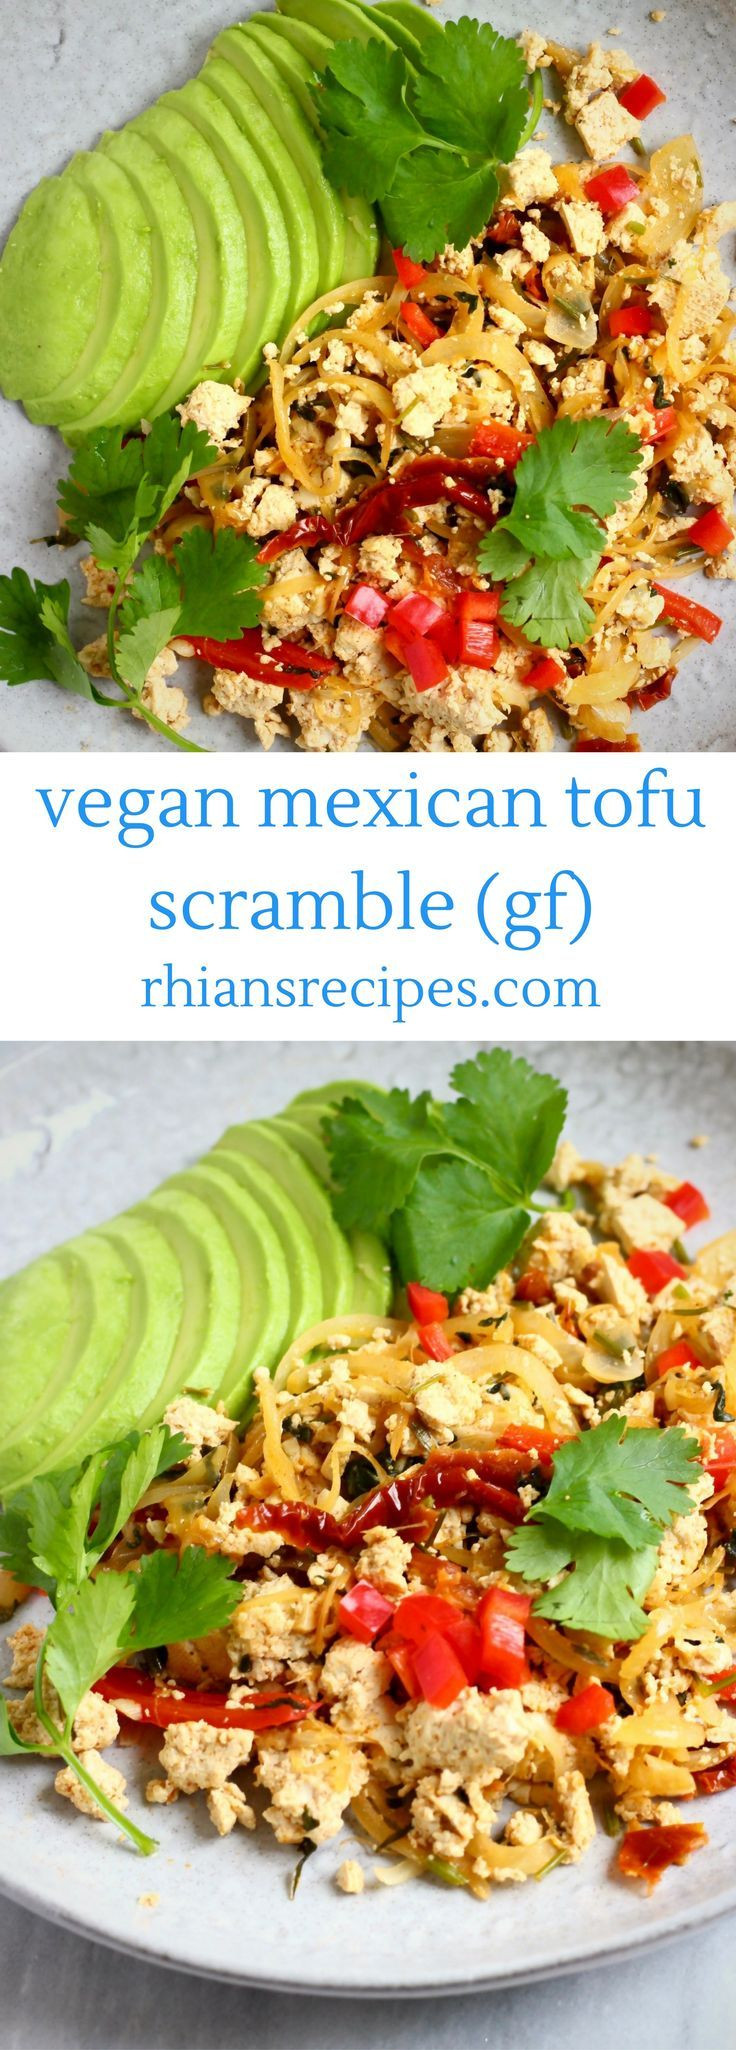 Mexican Tofu Recipes
 This Vegan Mexican Tofu Scramble is full of flavour super